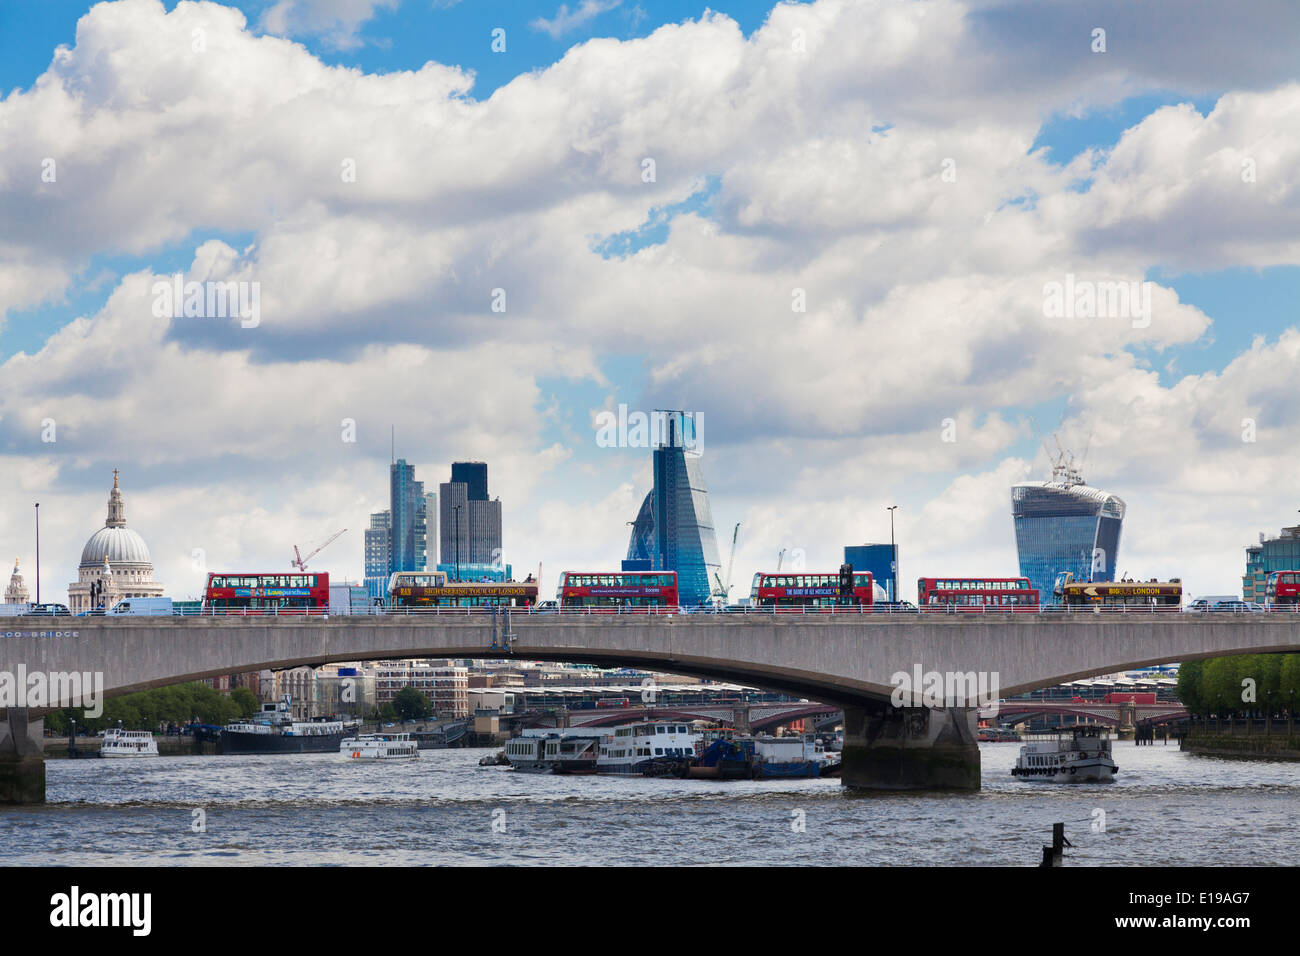 Roten Londoner Busse Waterloo Brücke überquert haben. Stockfoto